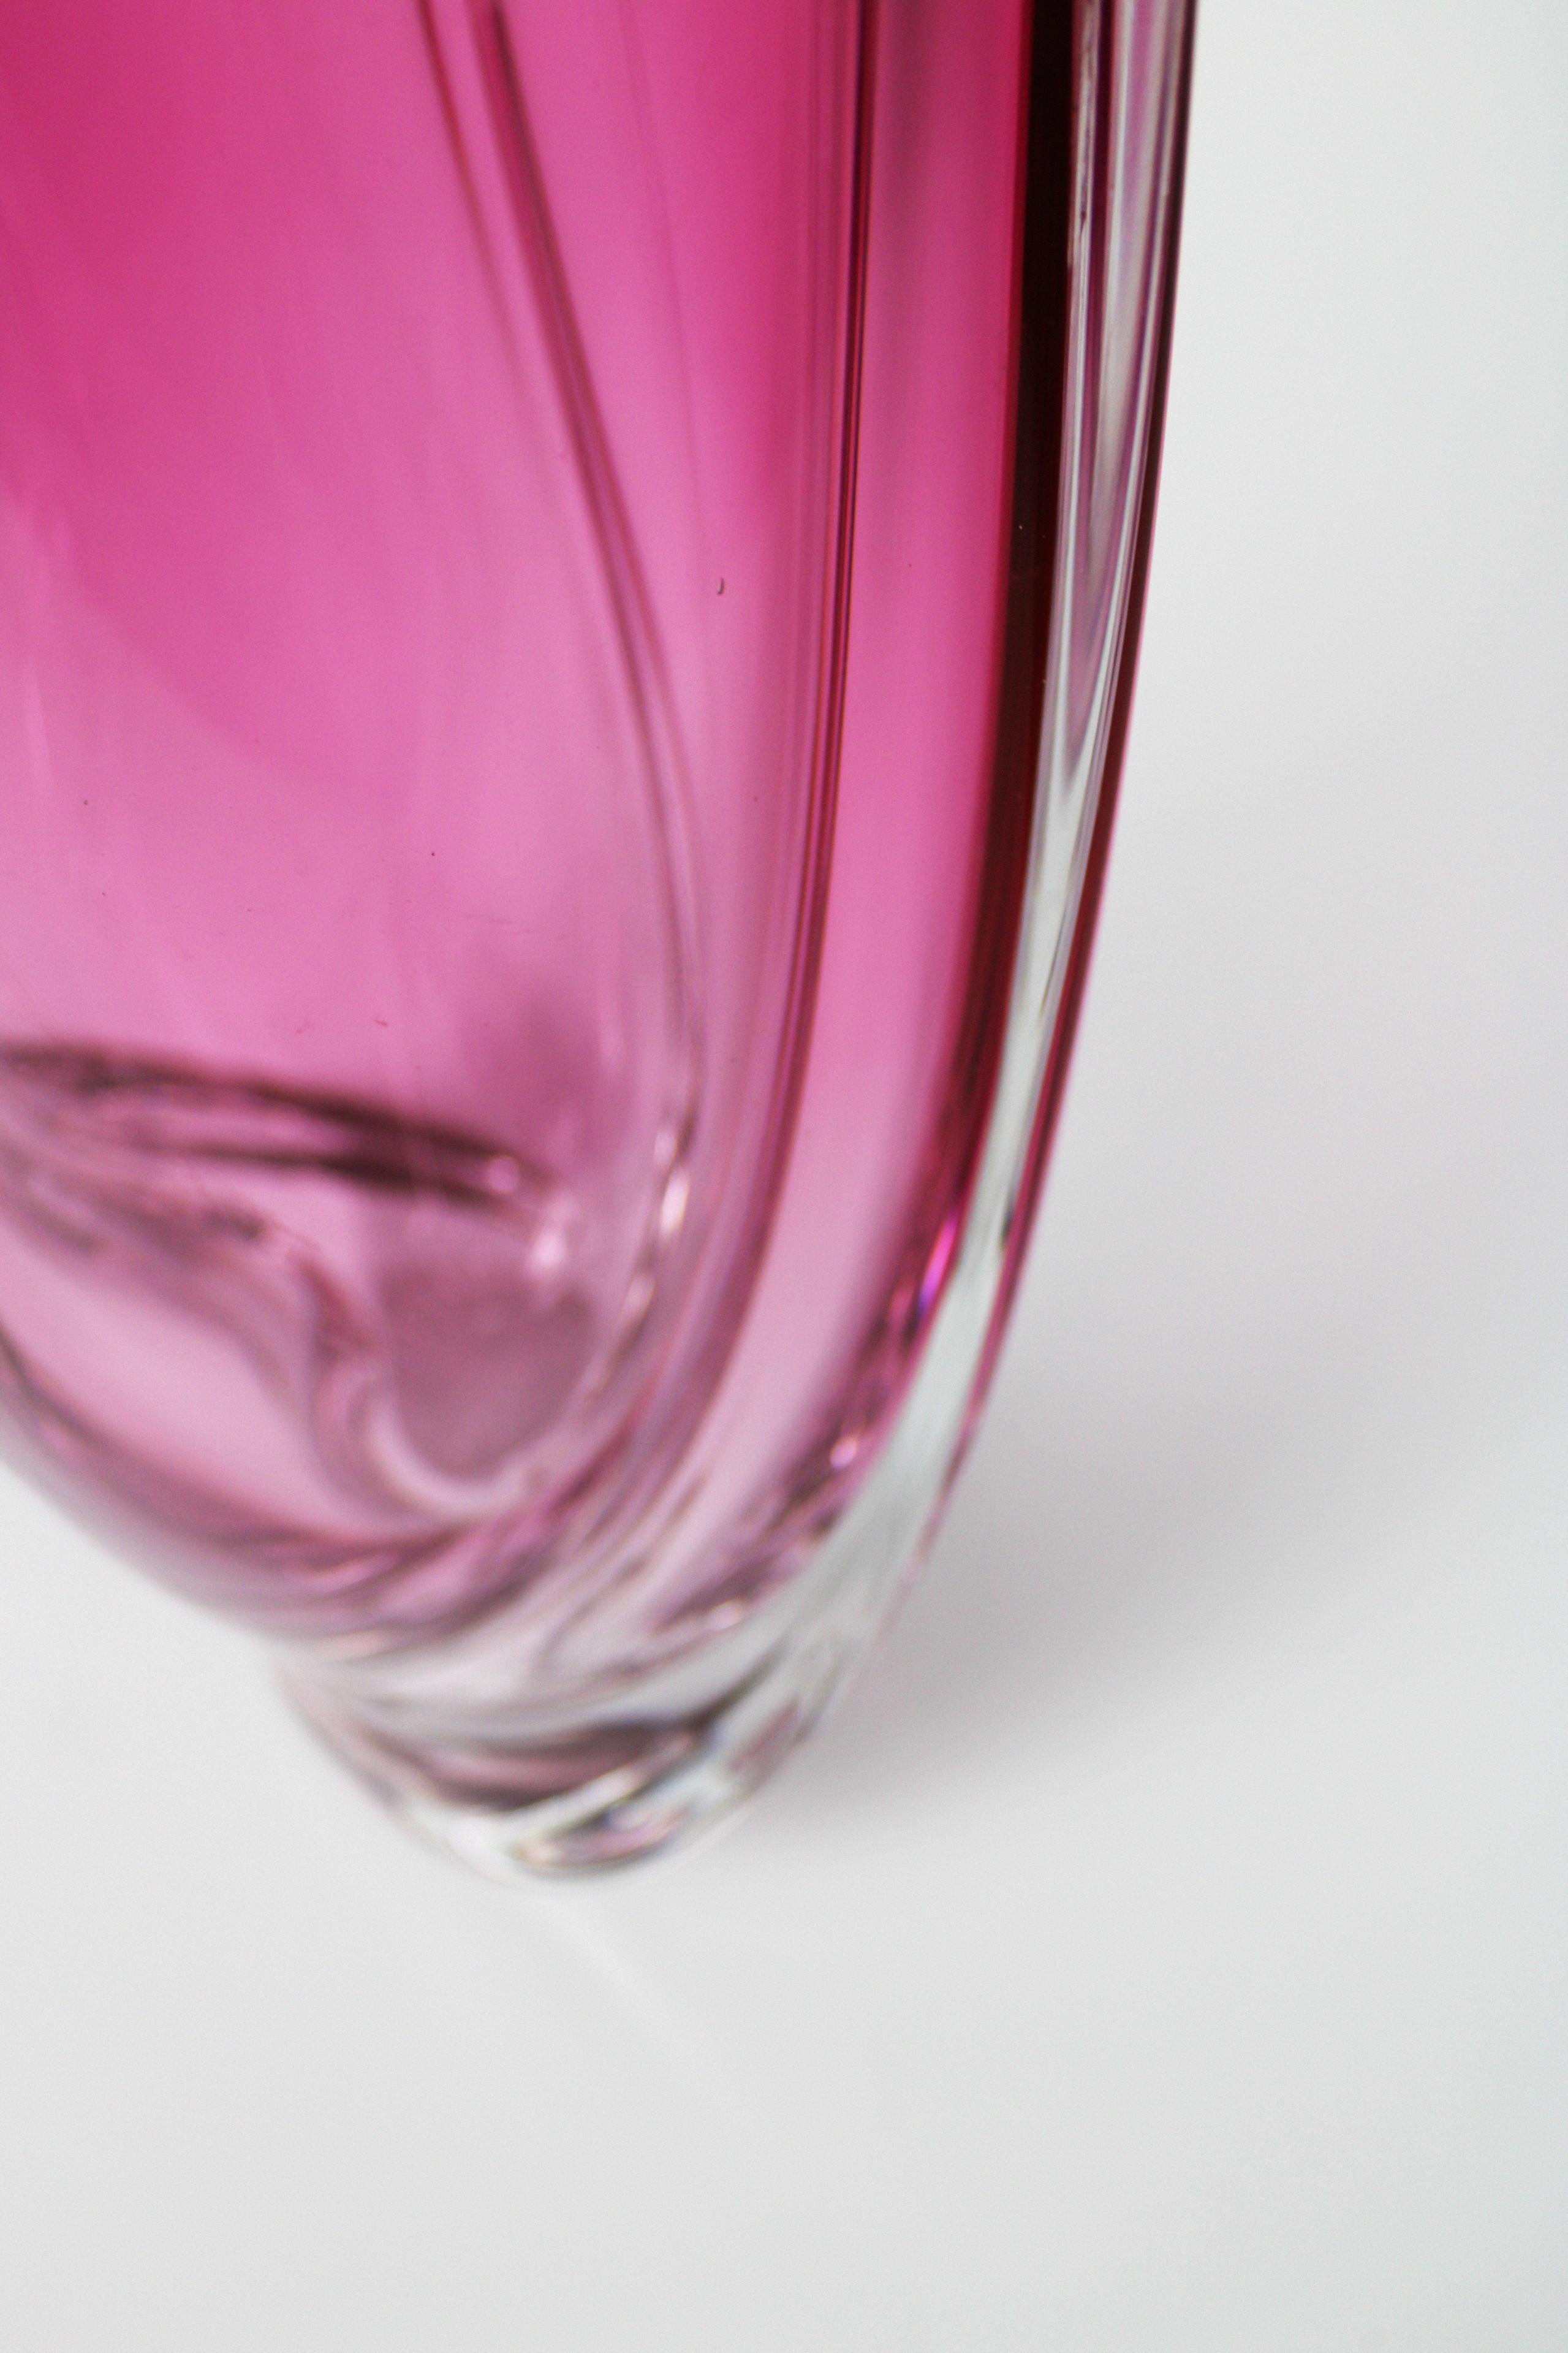 Mid-20th Century Val St Lambert Vase Art Crystal Glass Pink Vintage Art Deco 1950's Belgium For Sale